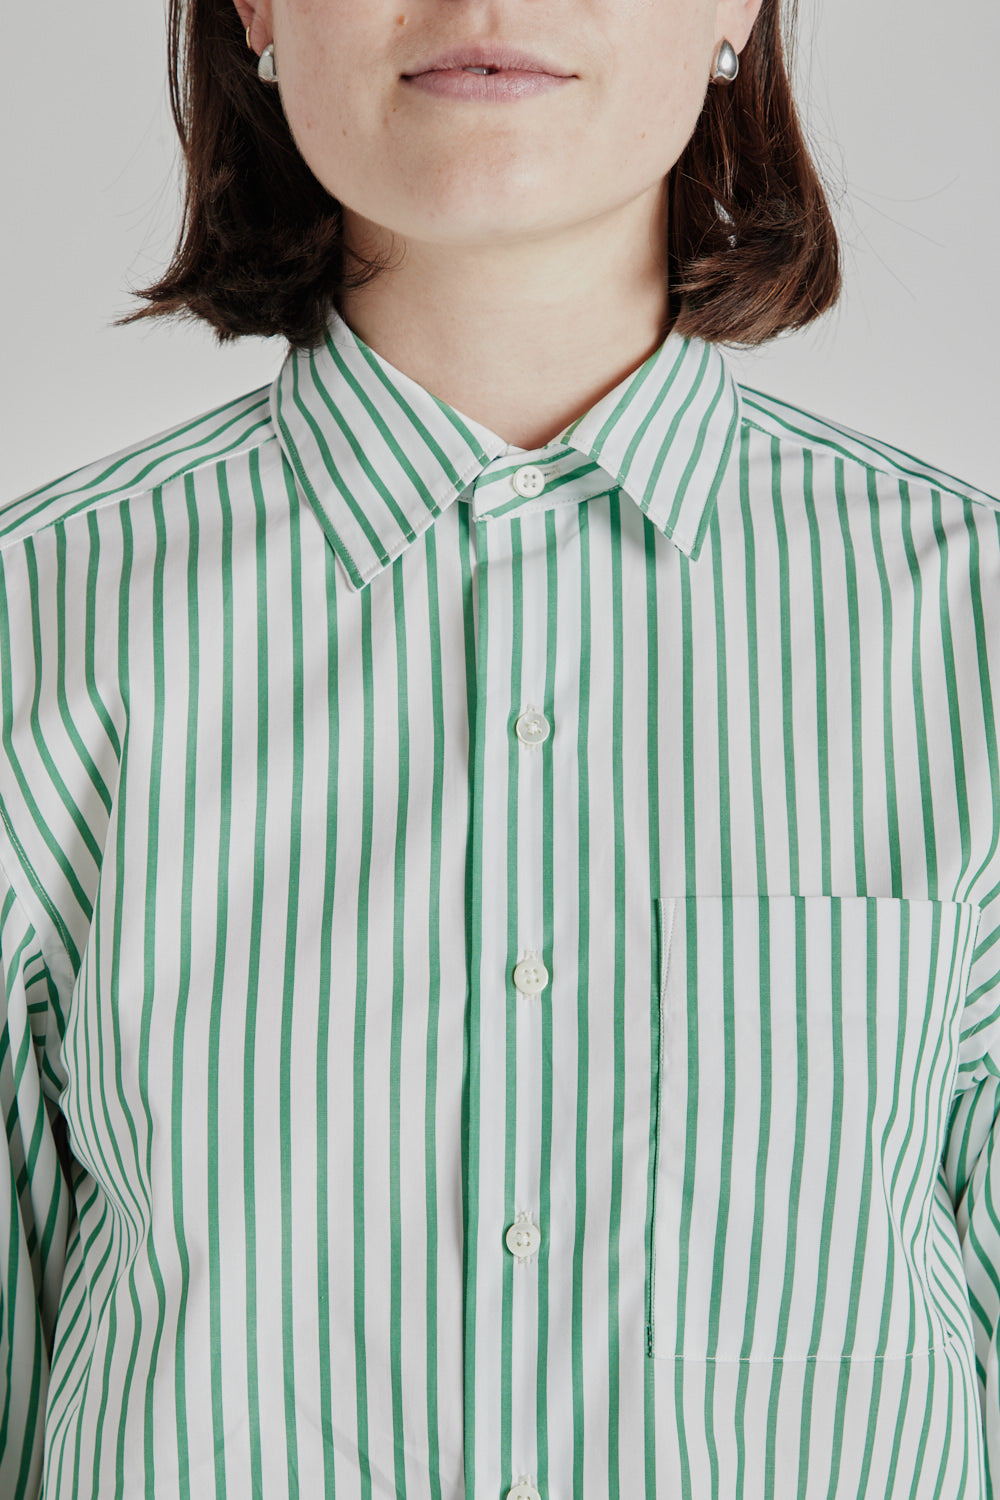 Blurhms Stripe Short Shirt in Ivory/Green